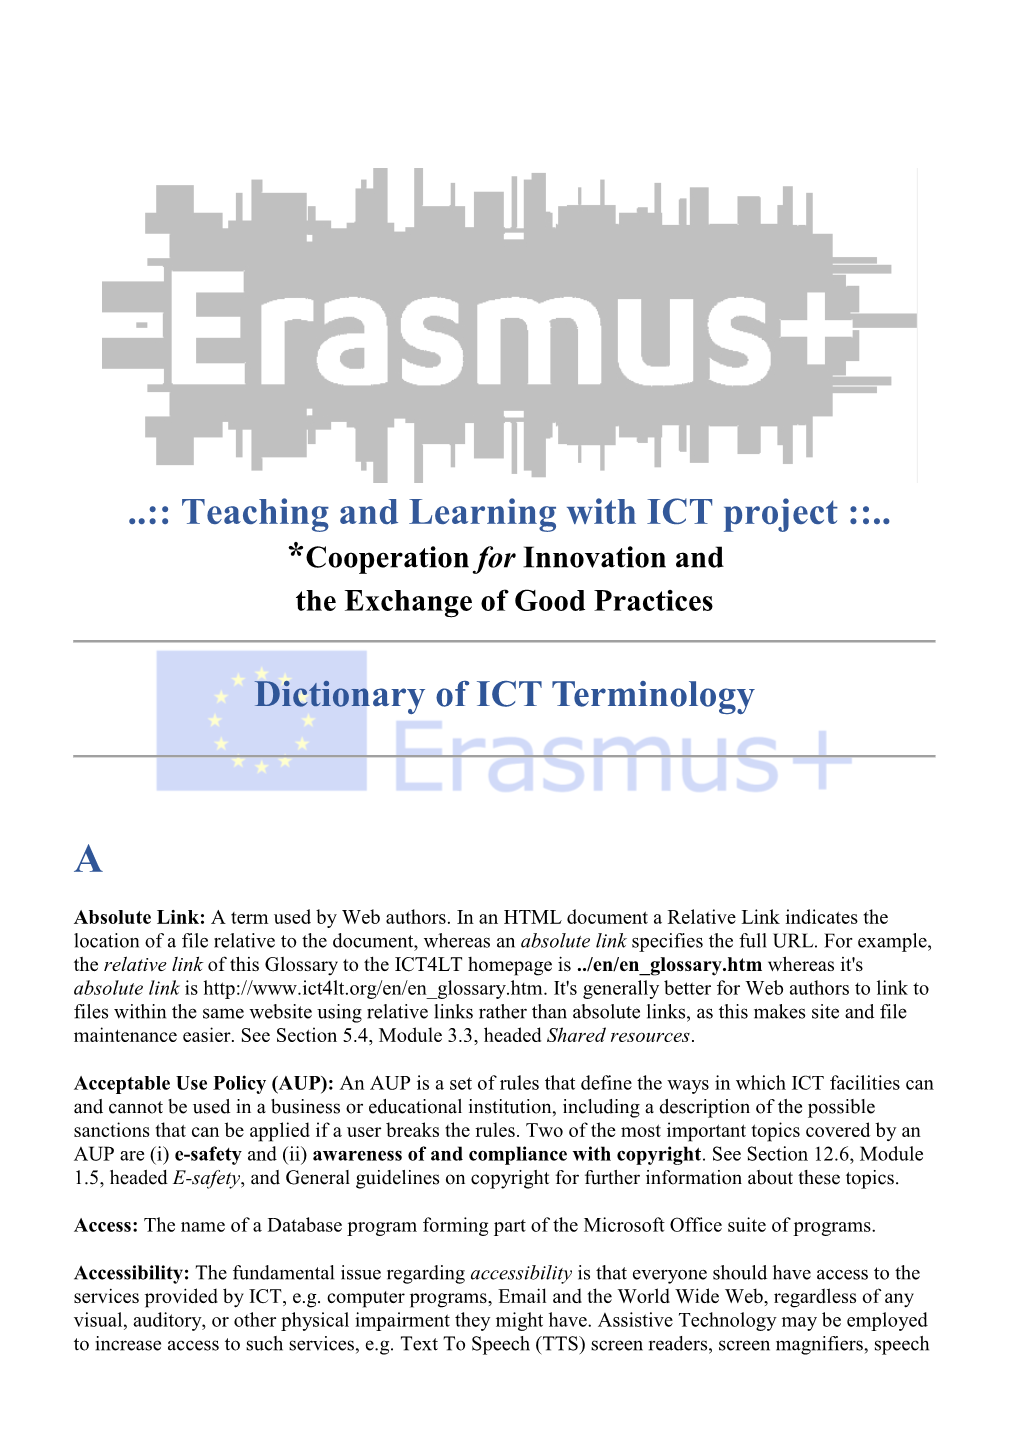 Glossary of ICT Terminology